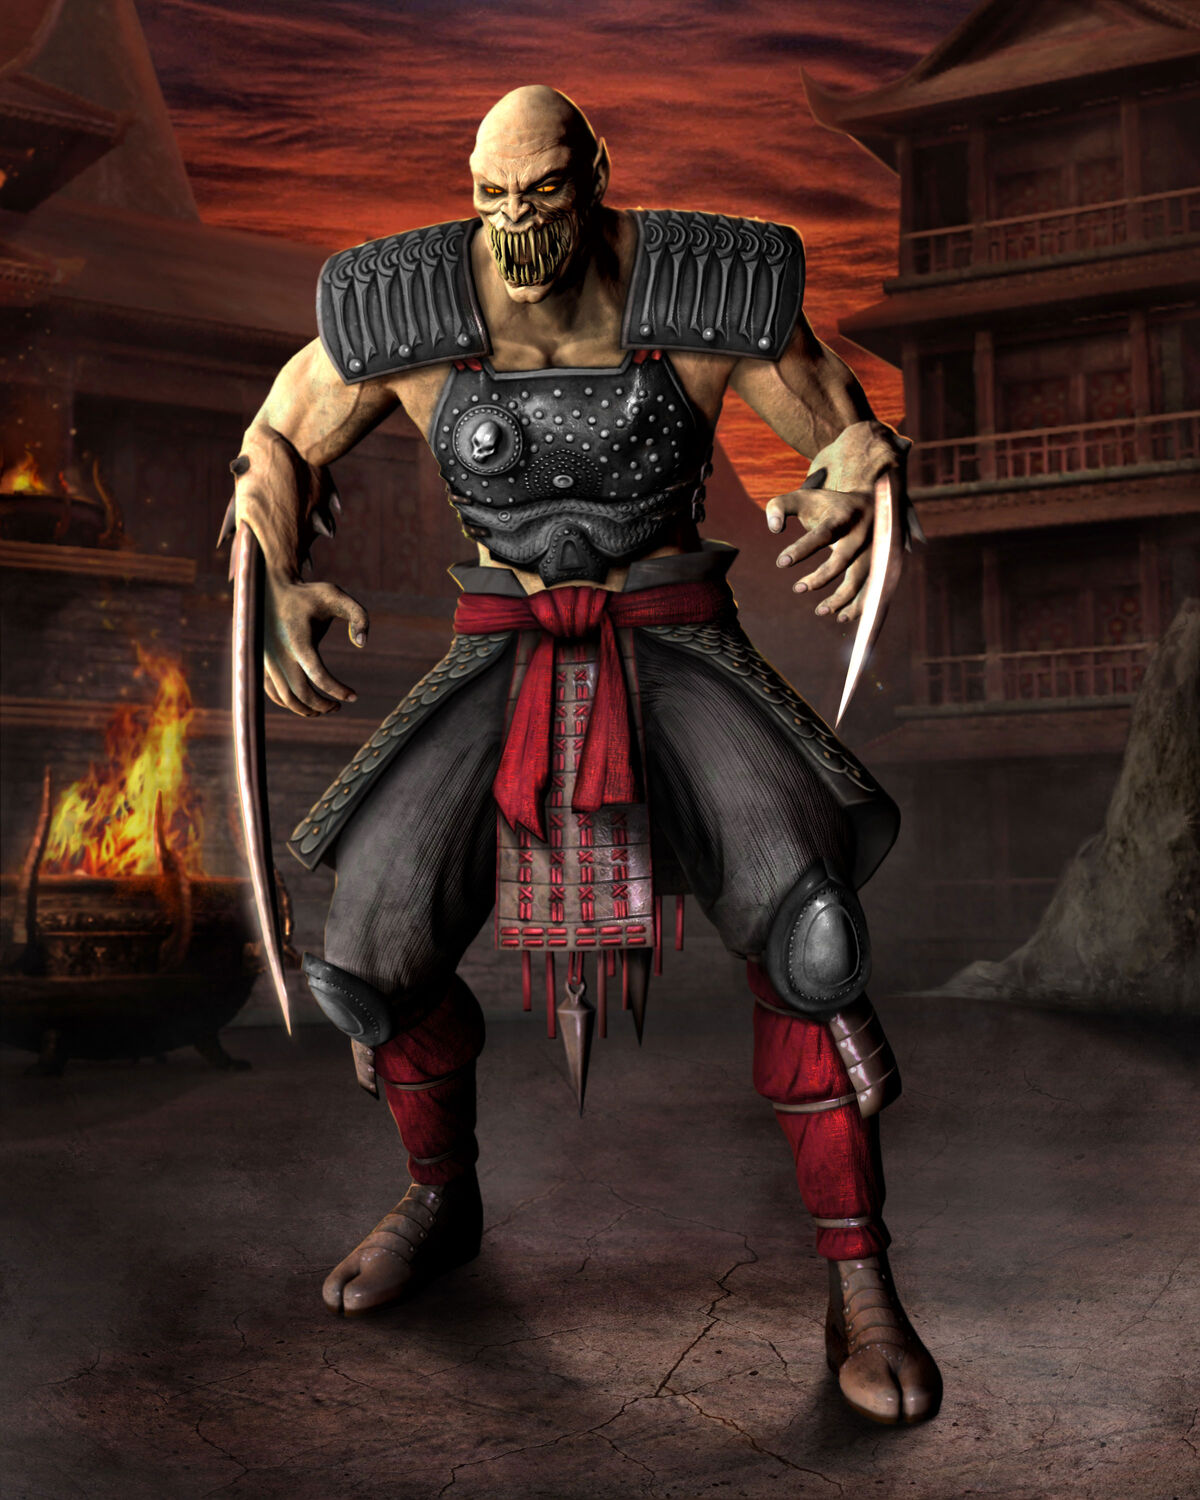 Mortal Kombat 1 Baraka Explains The Tarkatan's Disease And His Prior L, Baraka Before The Tarkatan Disease